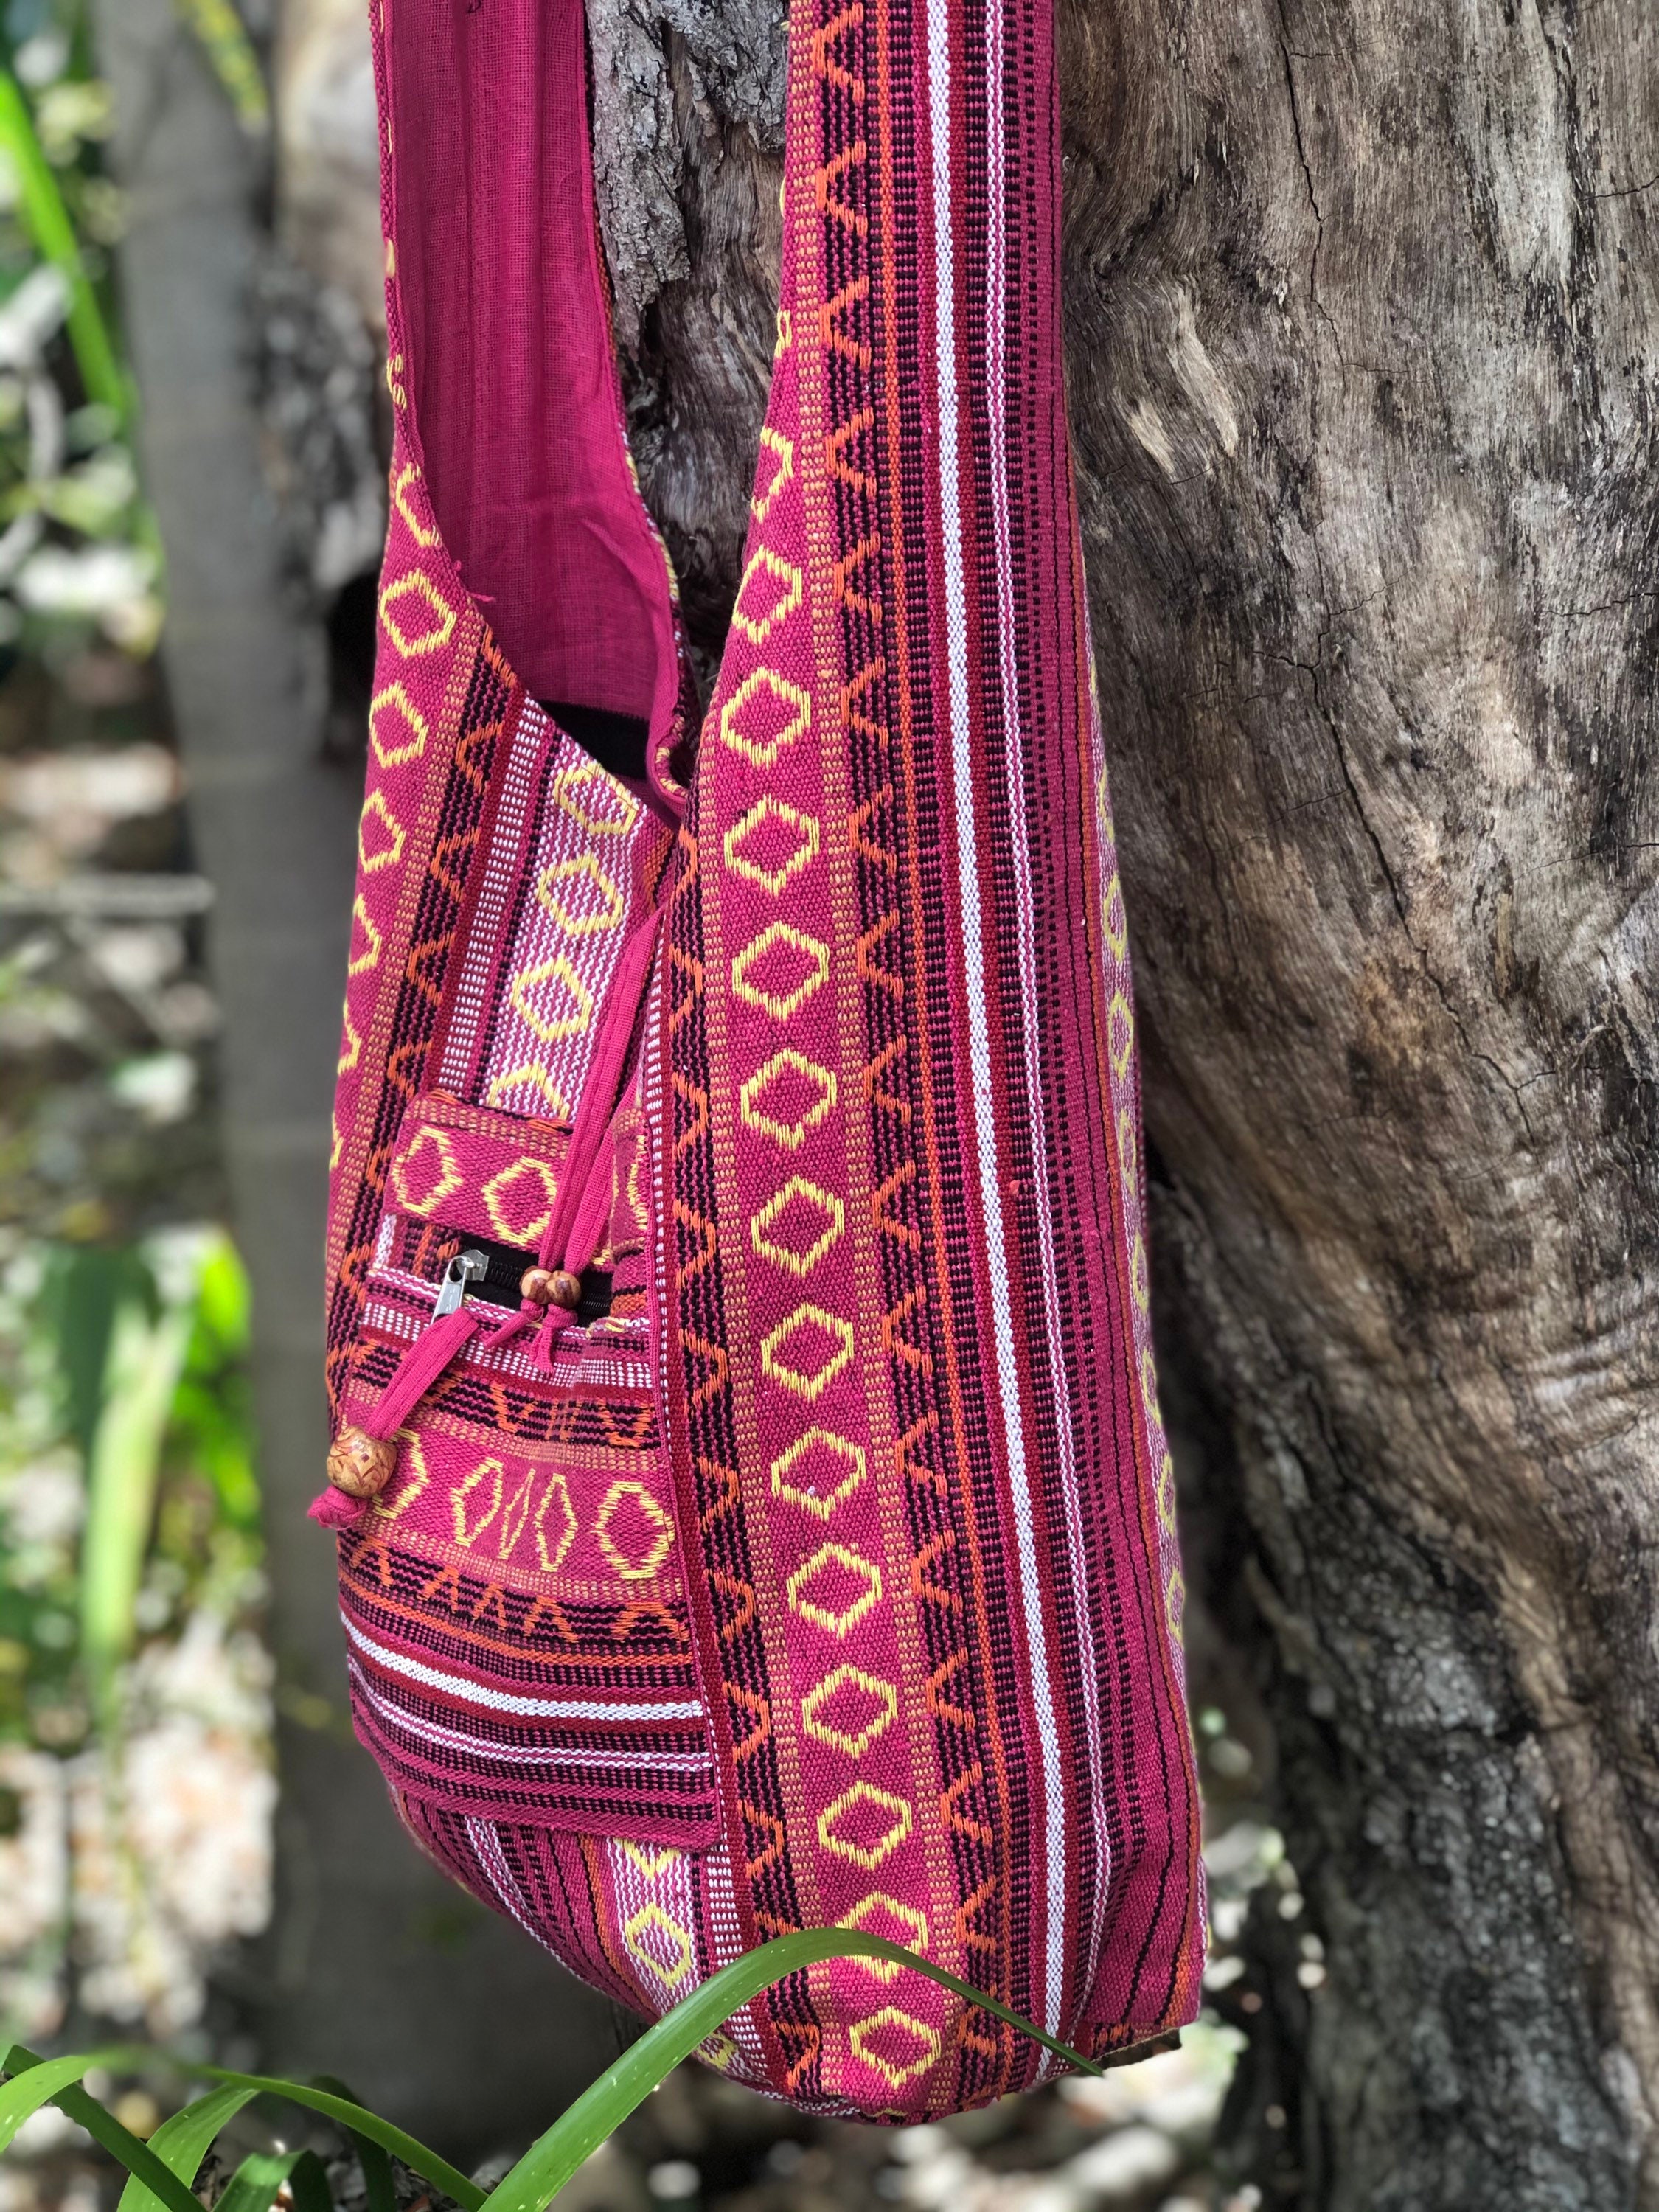 Chanel Pink Sling Bag Sling Crossbody Bag Pink - Price in India